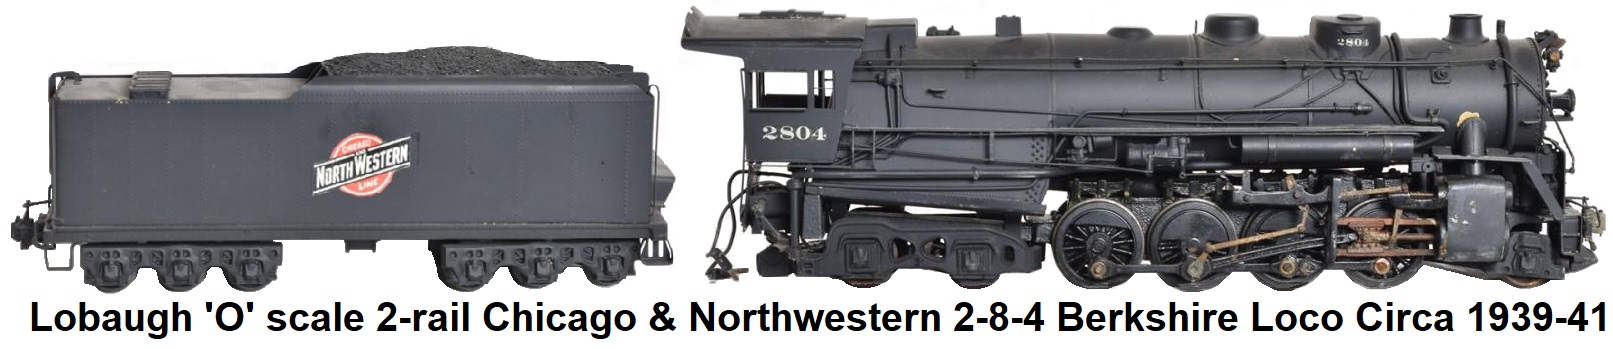 Lobaugh 'O' scale 2-rail 2-8-4 Chicago & North Western RR Berkshire loco and tender circa 1939-41